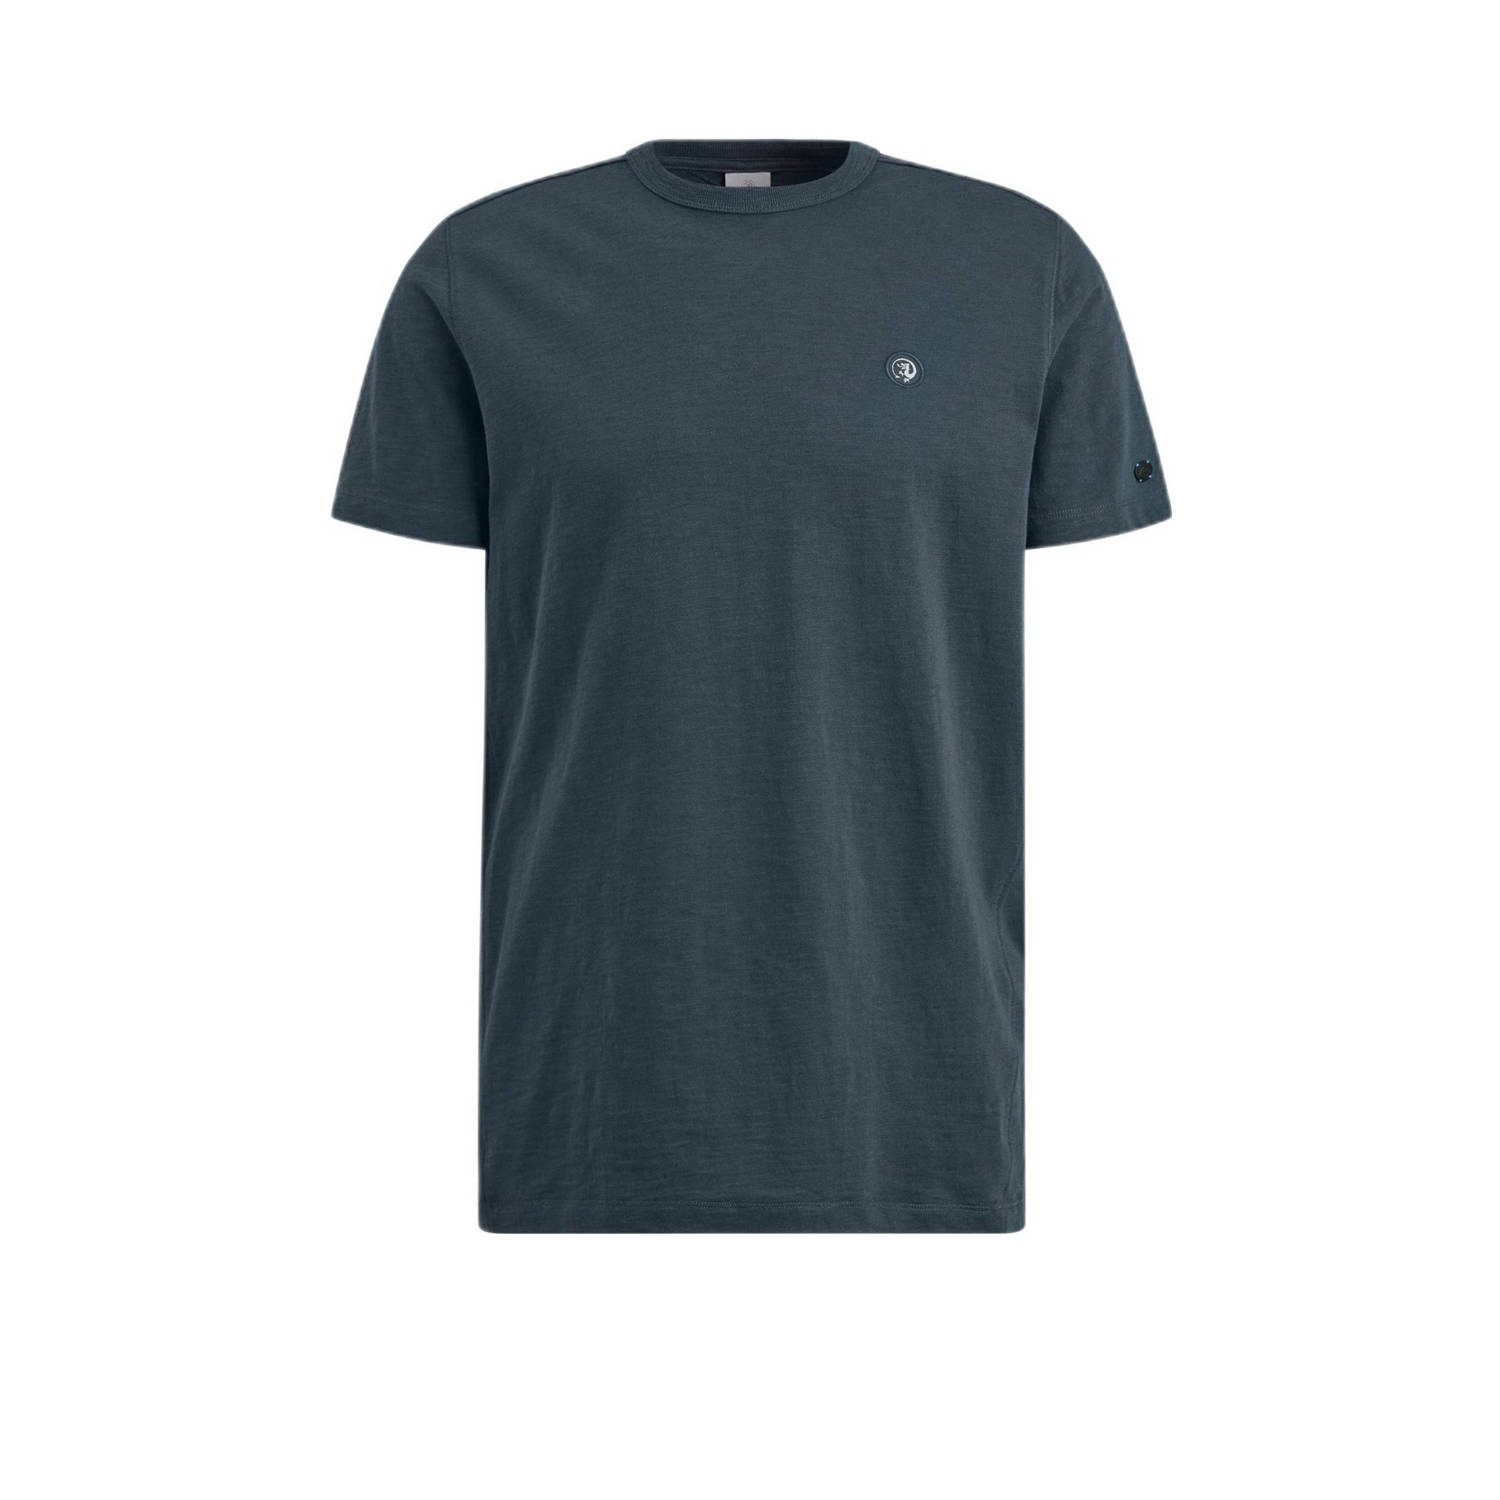 Cast Iron regular fit T-shirt met logo donkerblauw